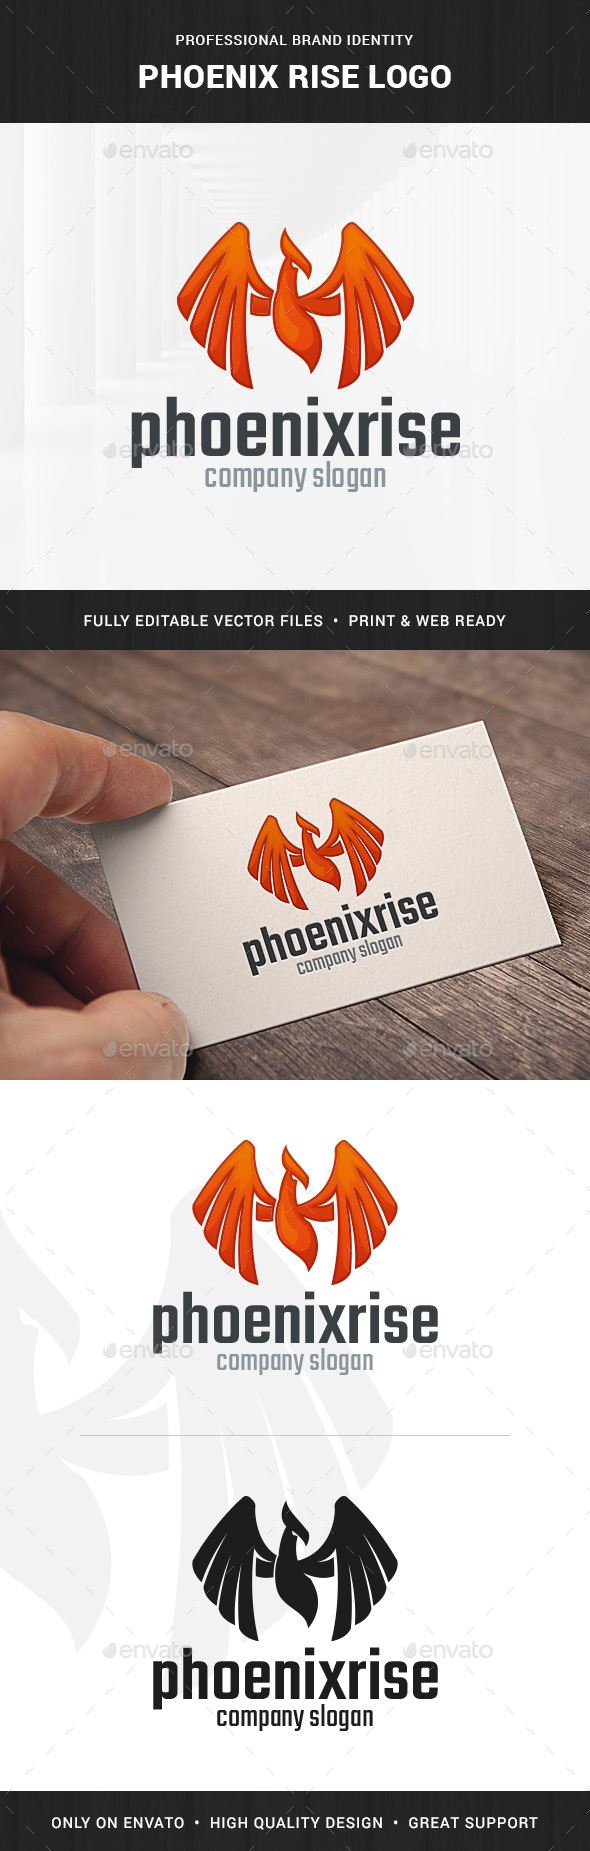 Phoenix Rise Logo Template